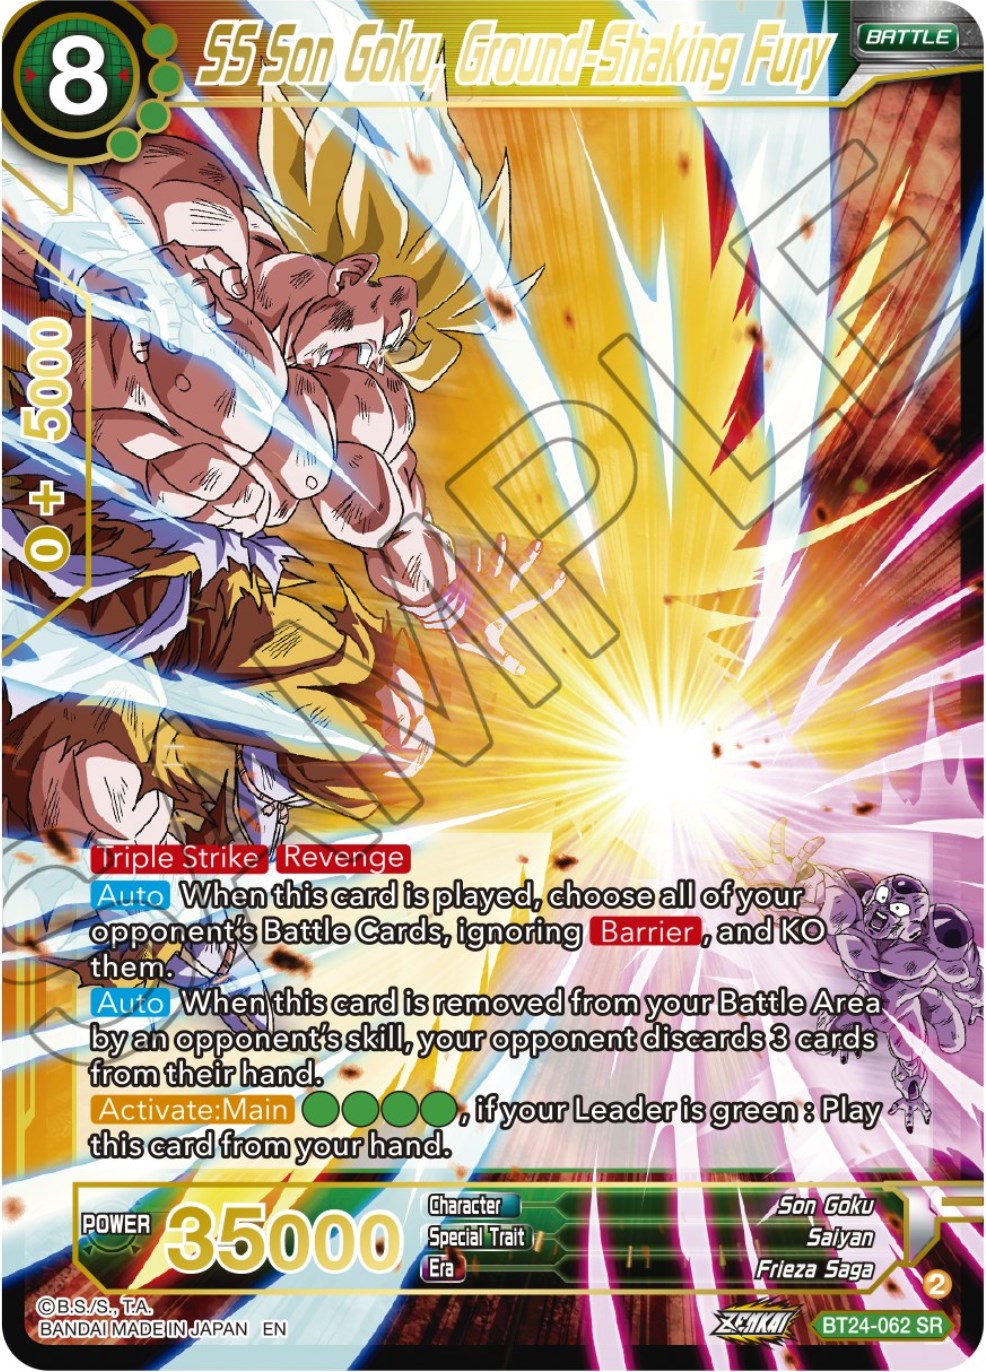 SS Son Goku, Ground-Shaking Fury (BT24-062) [Beyond Generations] | Sanctuary Gaming